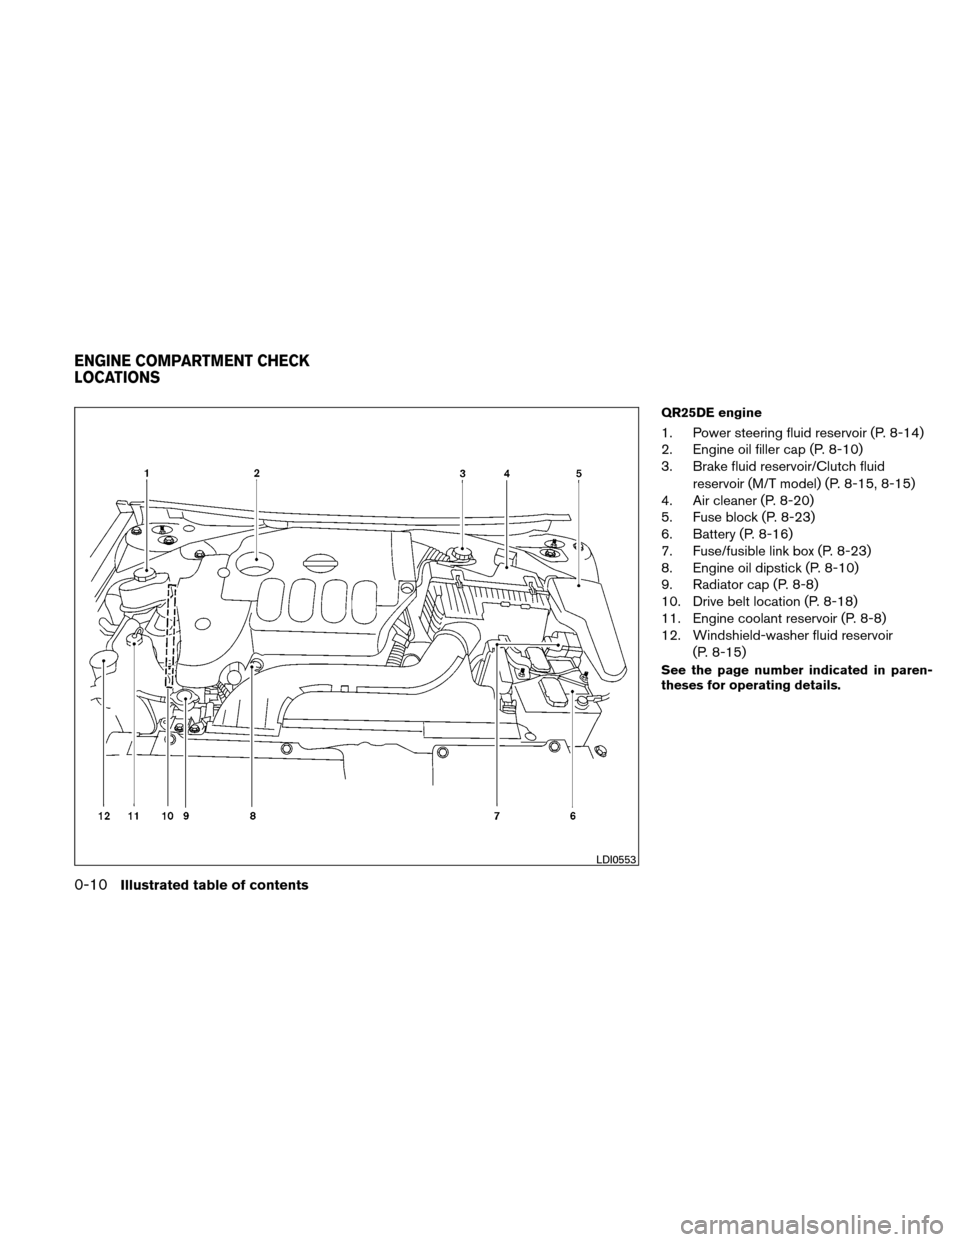 NISSAN ALTIMA COUPE 2011 D32 / 4.G User Guide QR25DE engine
1. Power steering fluid reservoir (P. 8-14)
2. Engine oil filler cap (P. 8-10)
3. Brake fluid reservoir/Clutch fluidreservoir (M/T model) (P. 8-15, 8-15)
4. Air cleaner (P. 8-20)
5. Fuse